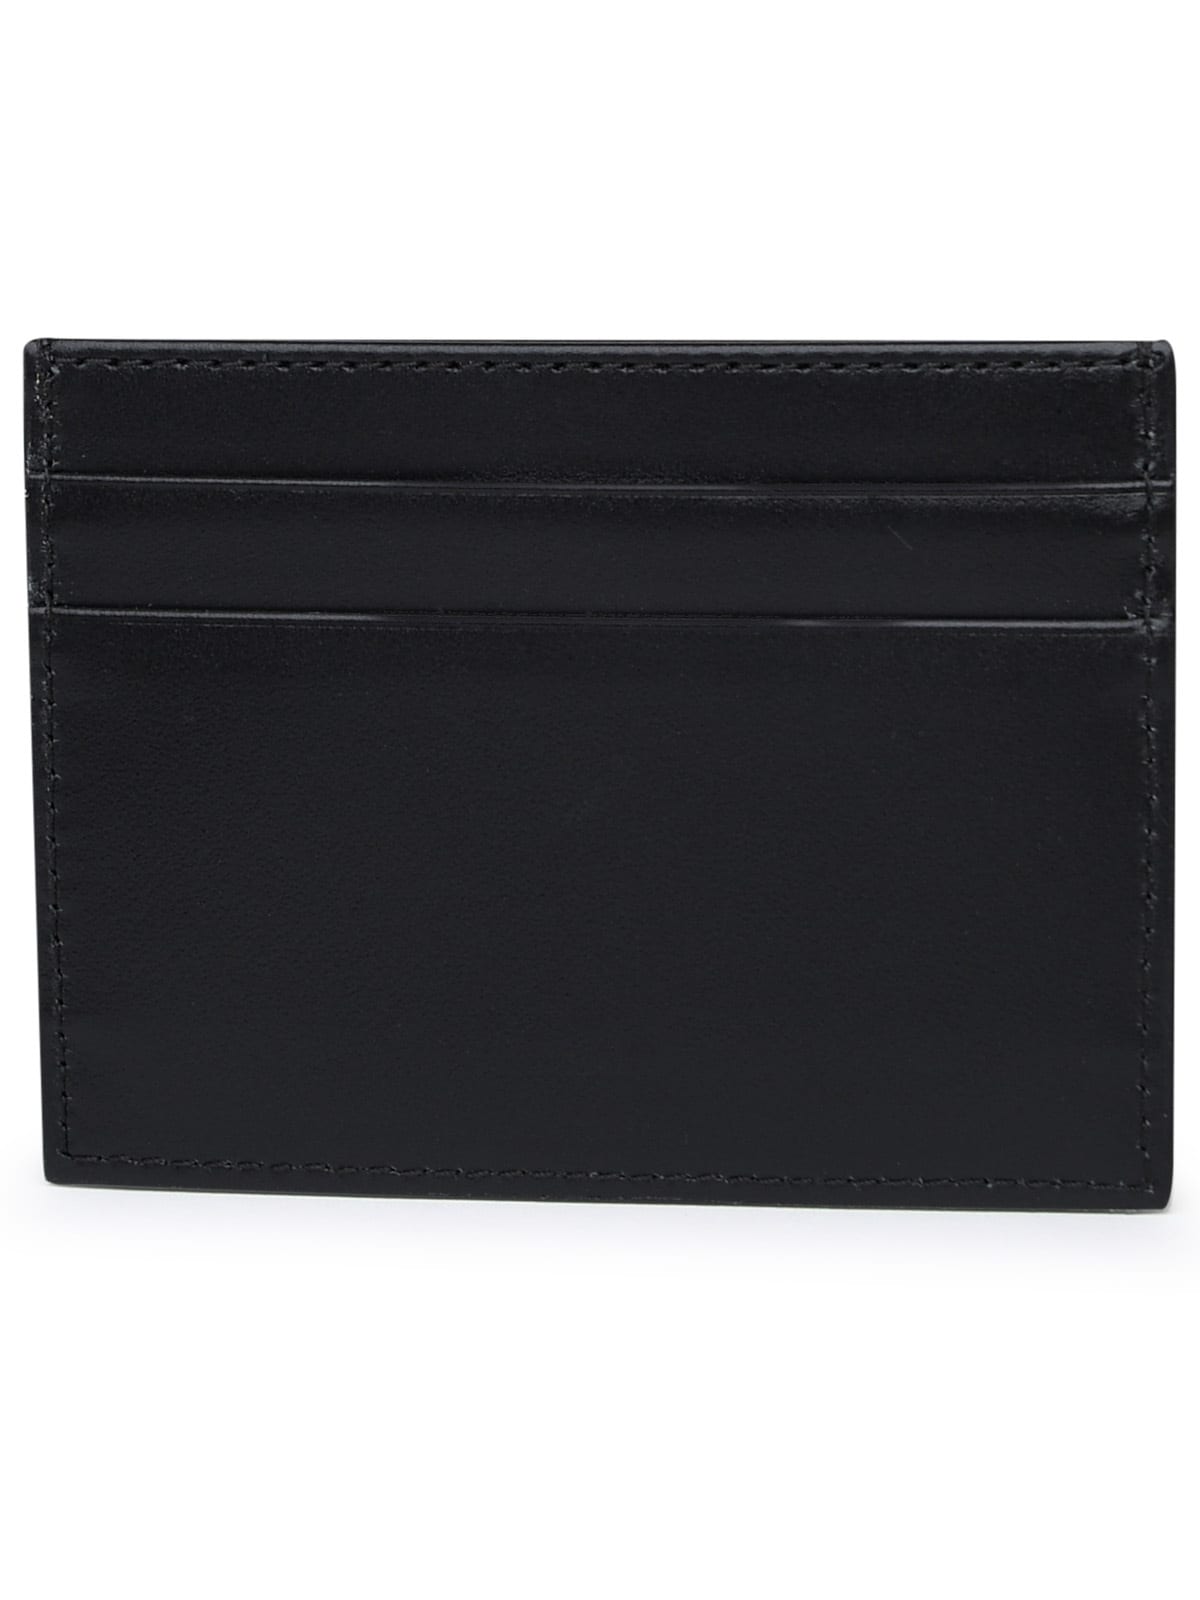 Shop Dolce & Gabbana Black Leather Card Holder